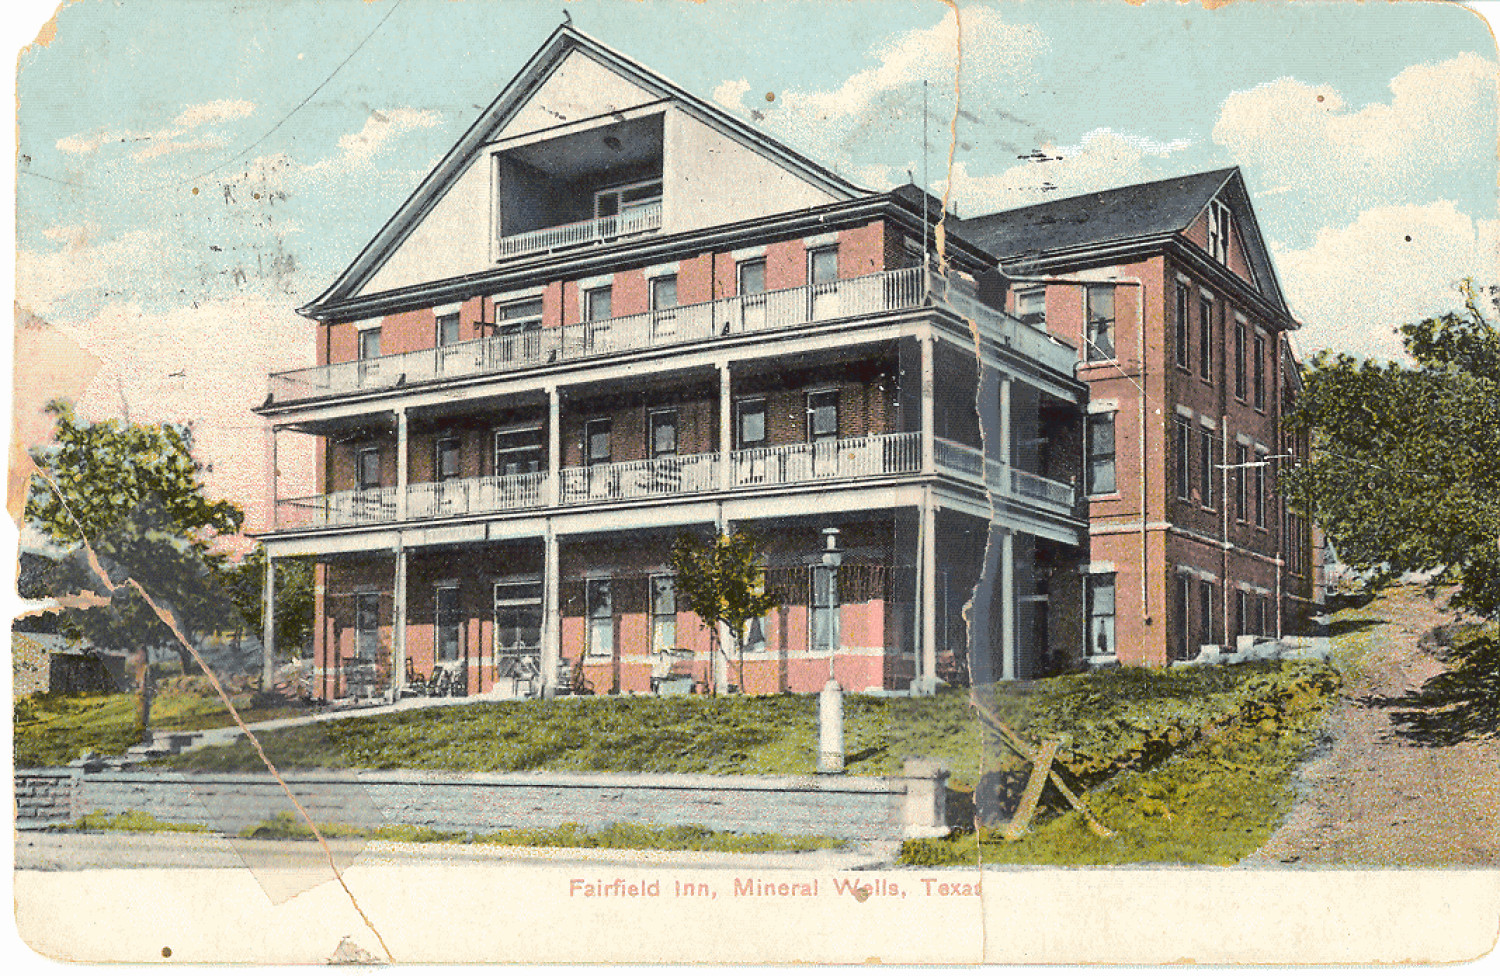 Fairfield Inn, Mineral Wells, Tex
                                                
                                                    [Sequence #]: 1 of 1
                                                